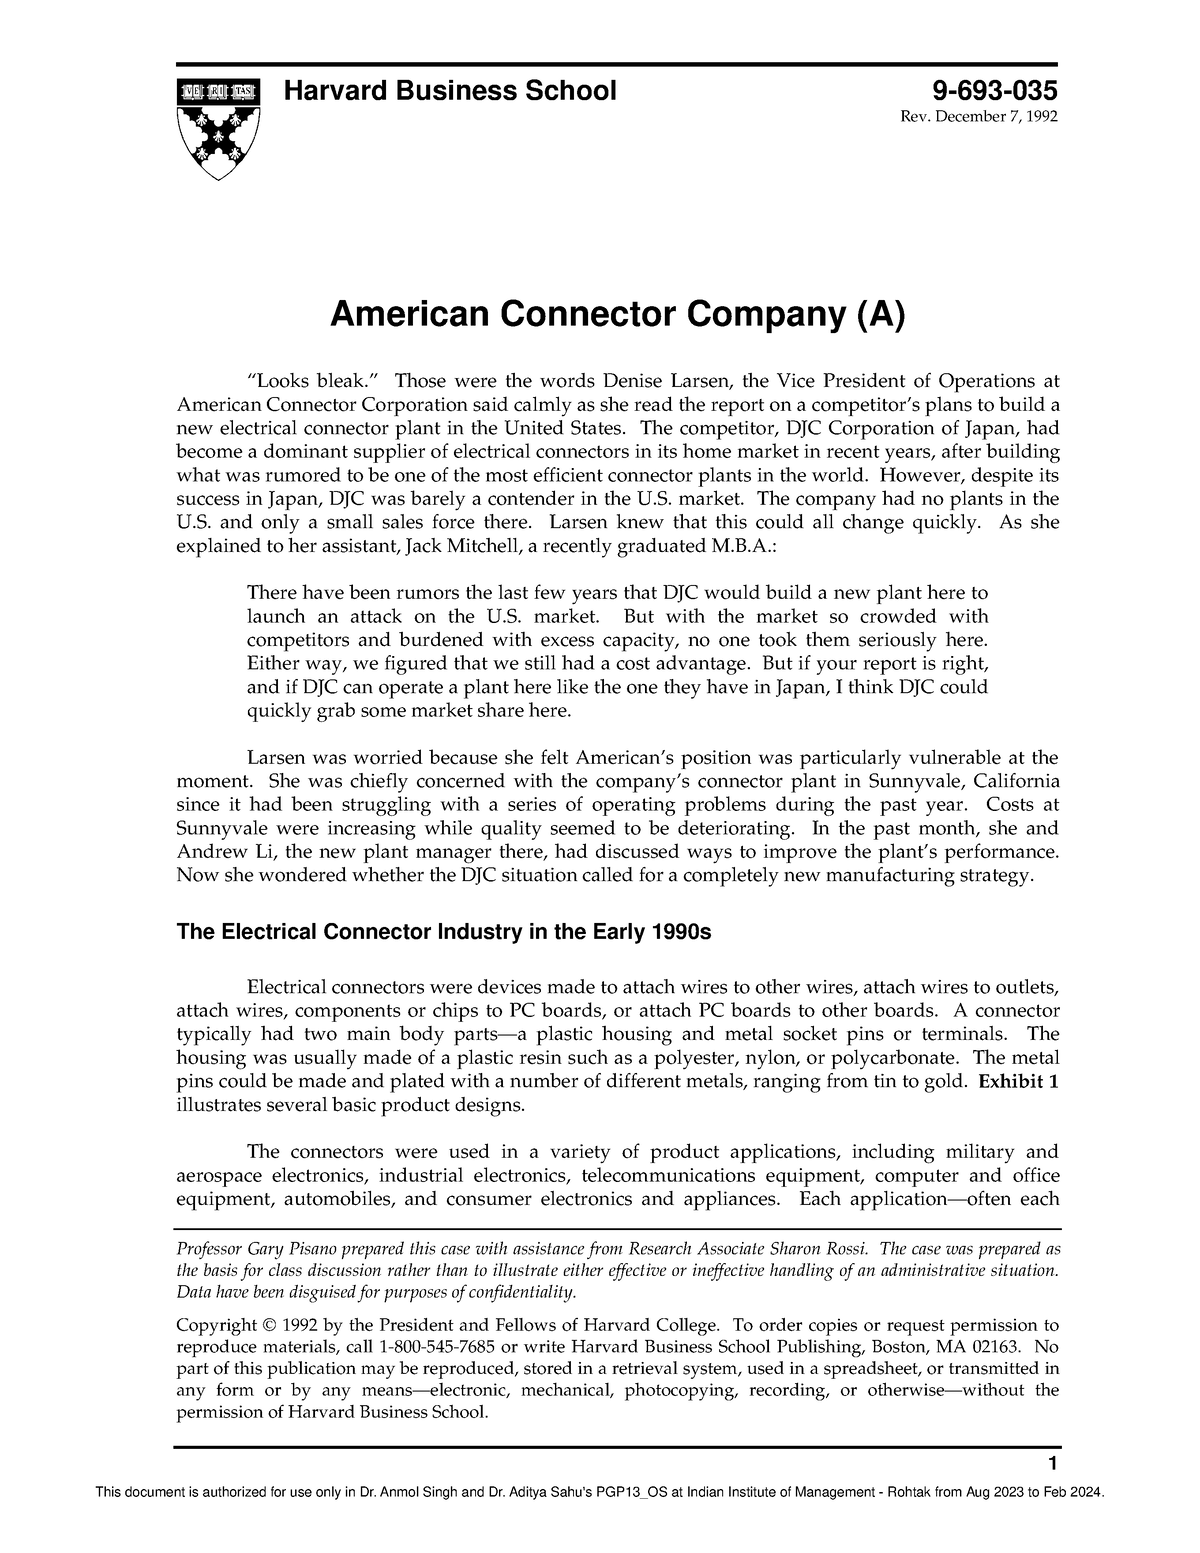 american connector company case study pdf